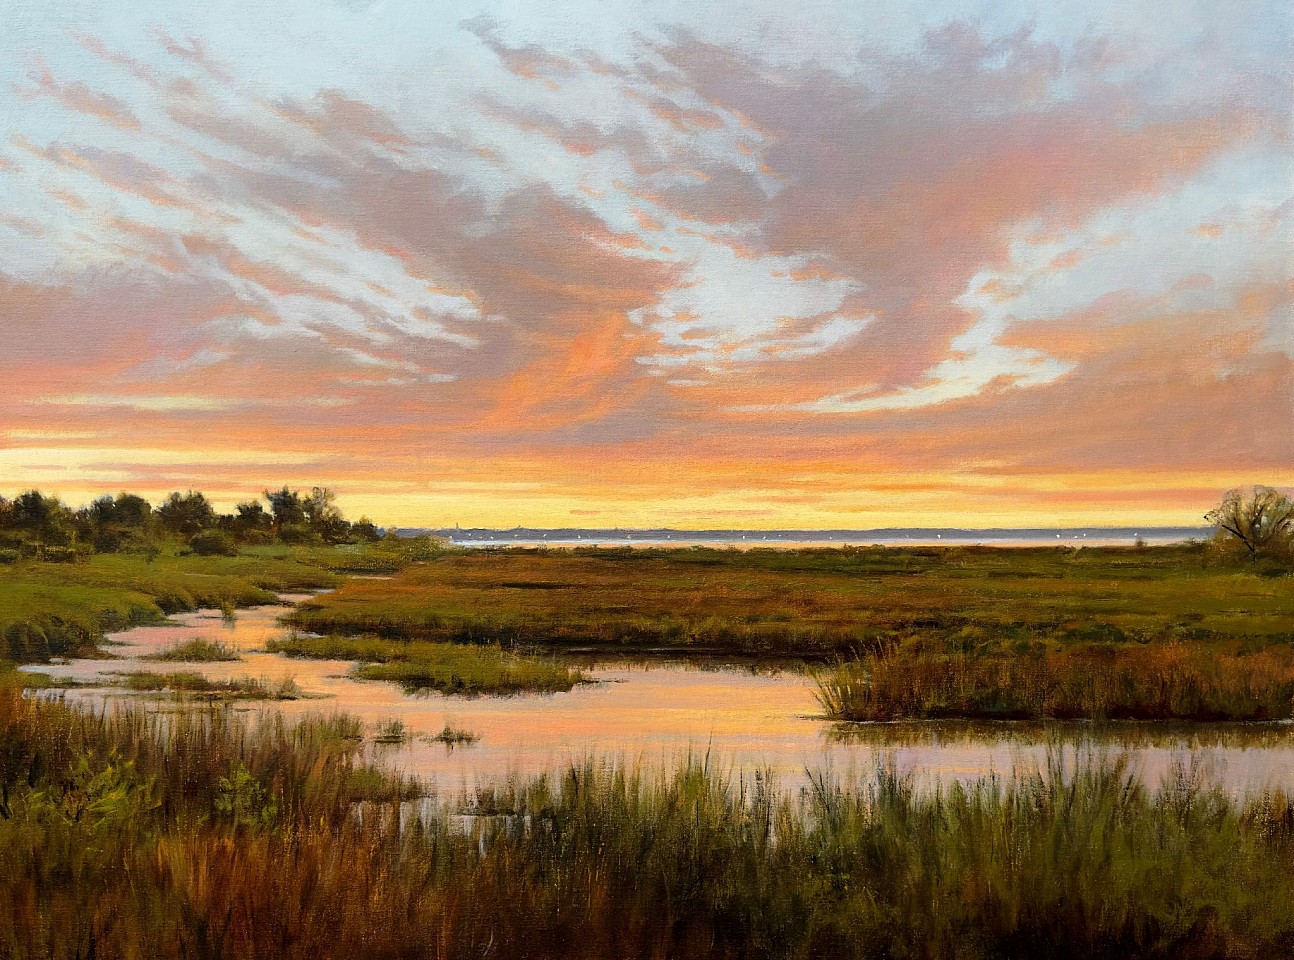 Frank Corso, Sunset Splendor, 2022
oil on canvas, 30 x 40 in. (76.2 x 101.6 cm)
FC221101